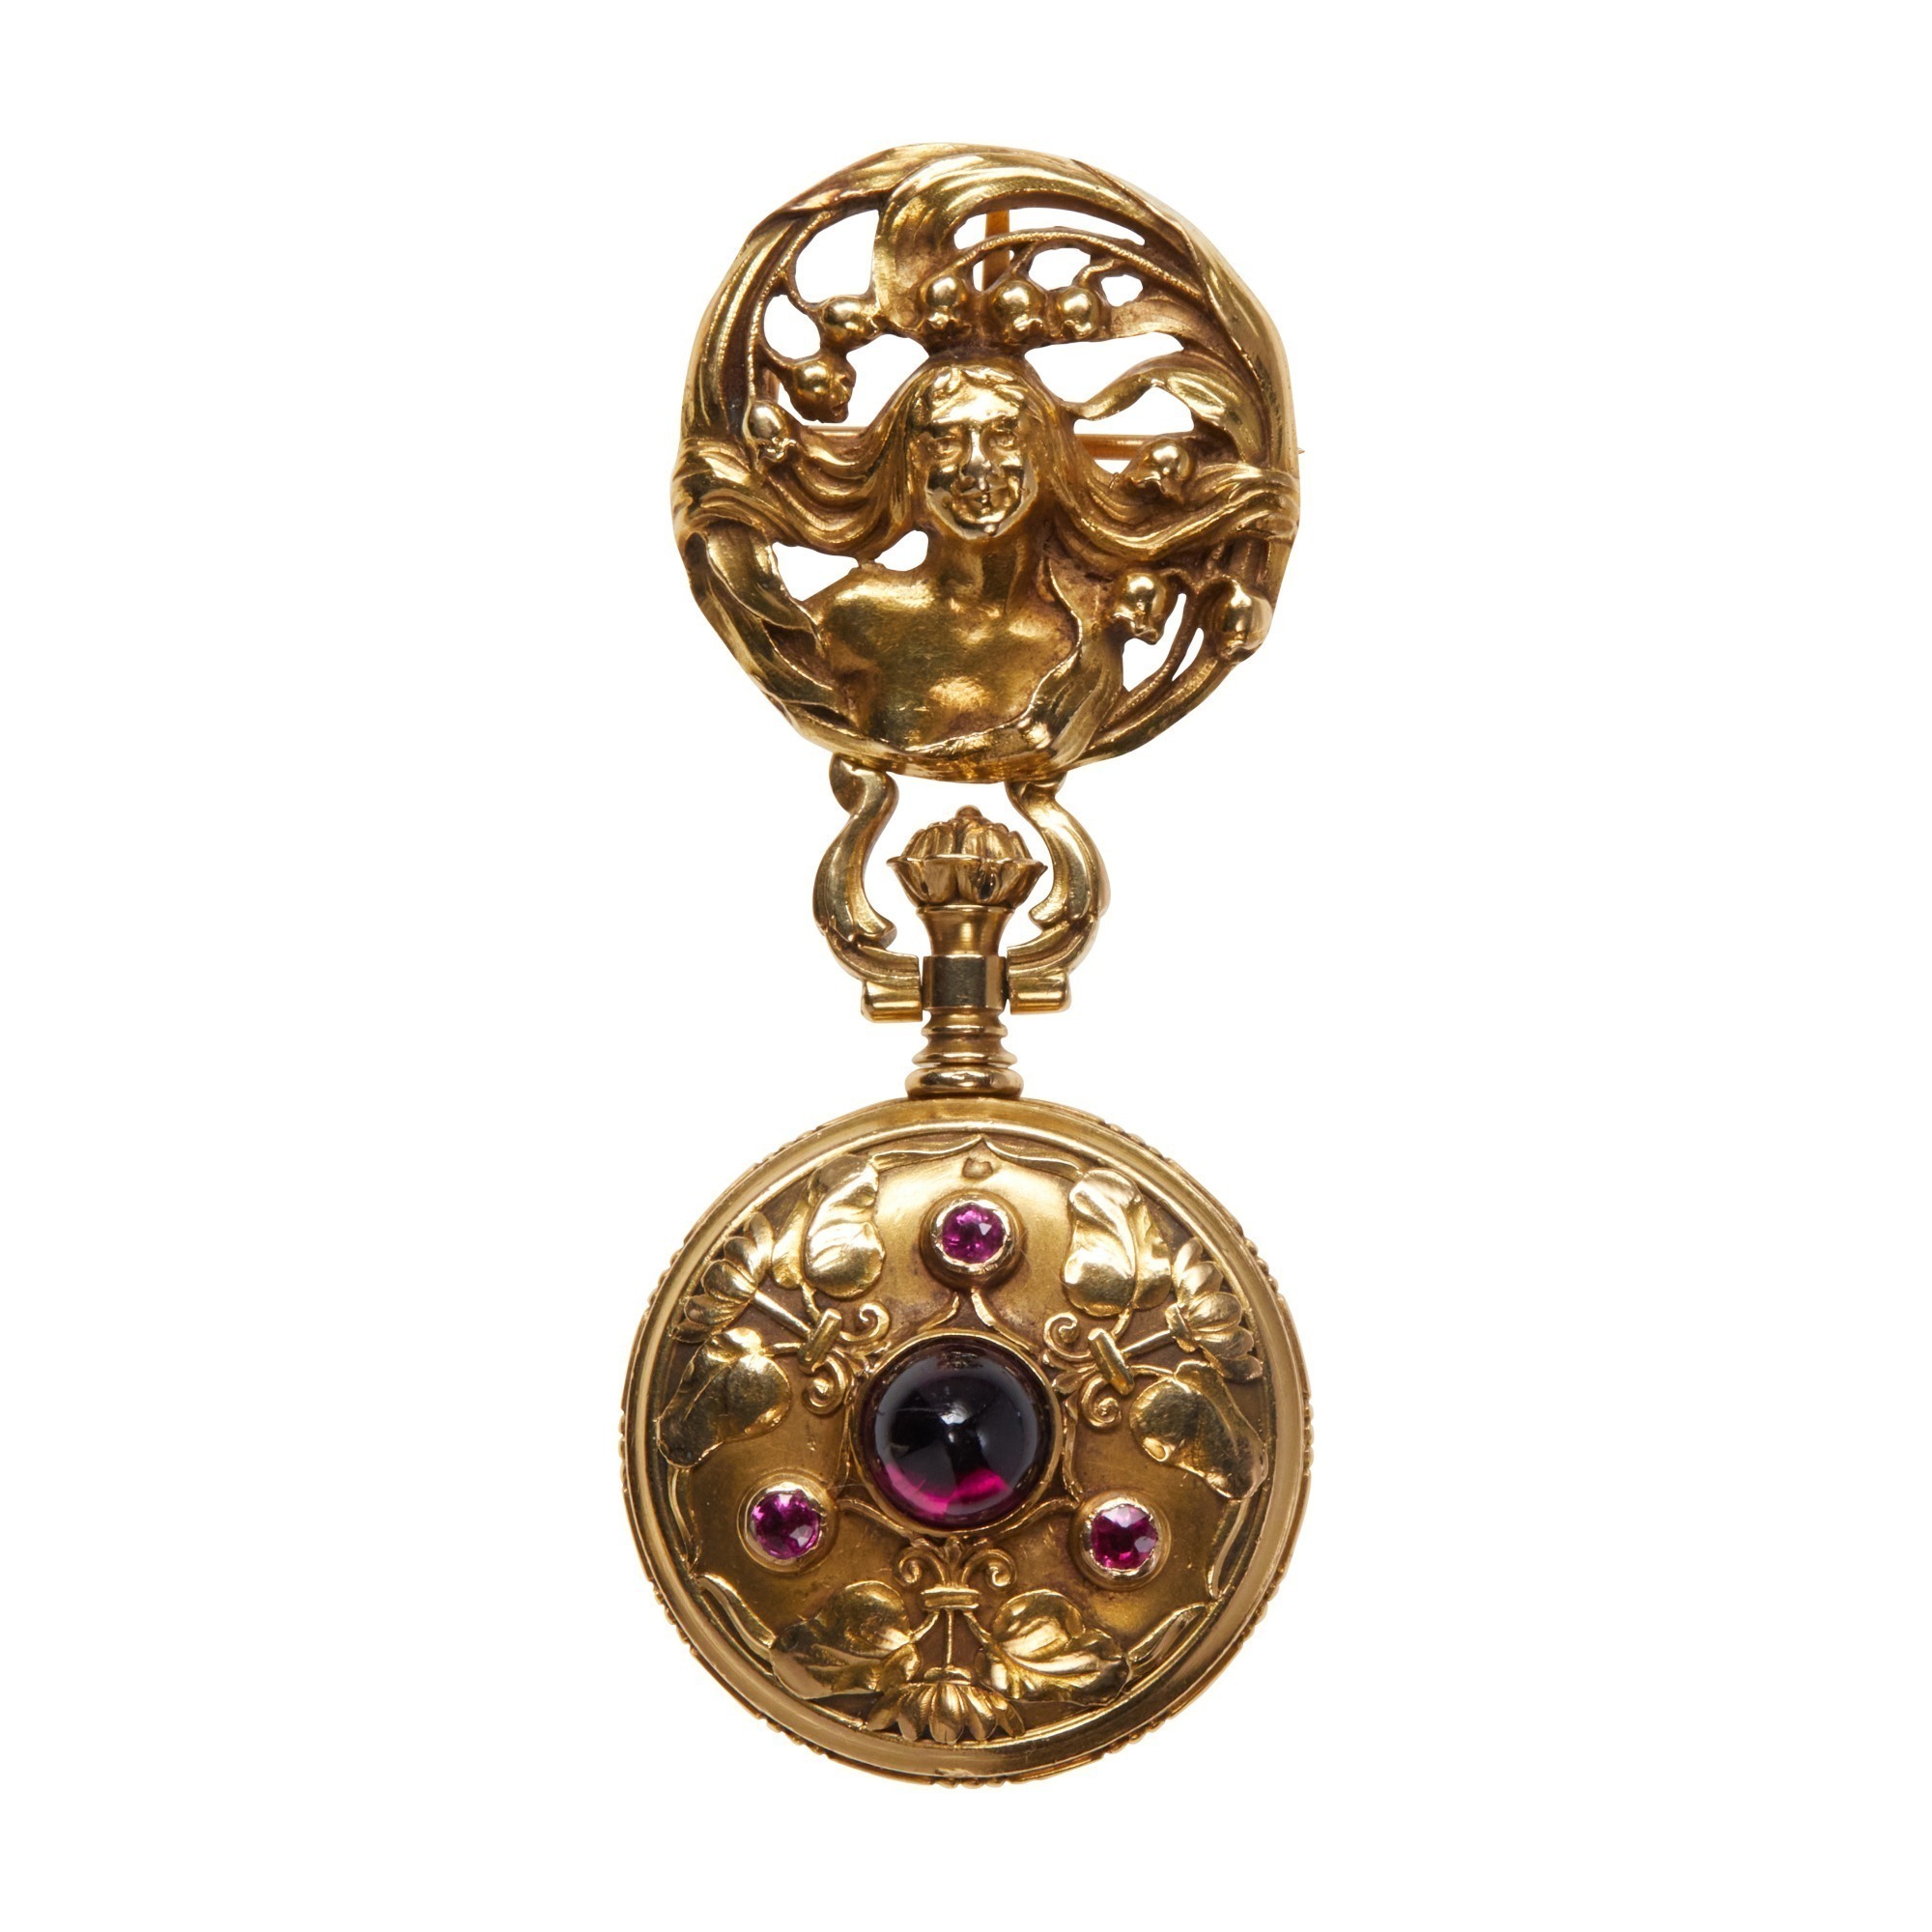 Art Nouveau Swiss 18k Gold Pendant Watch with Pin